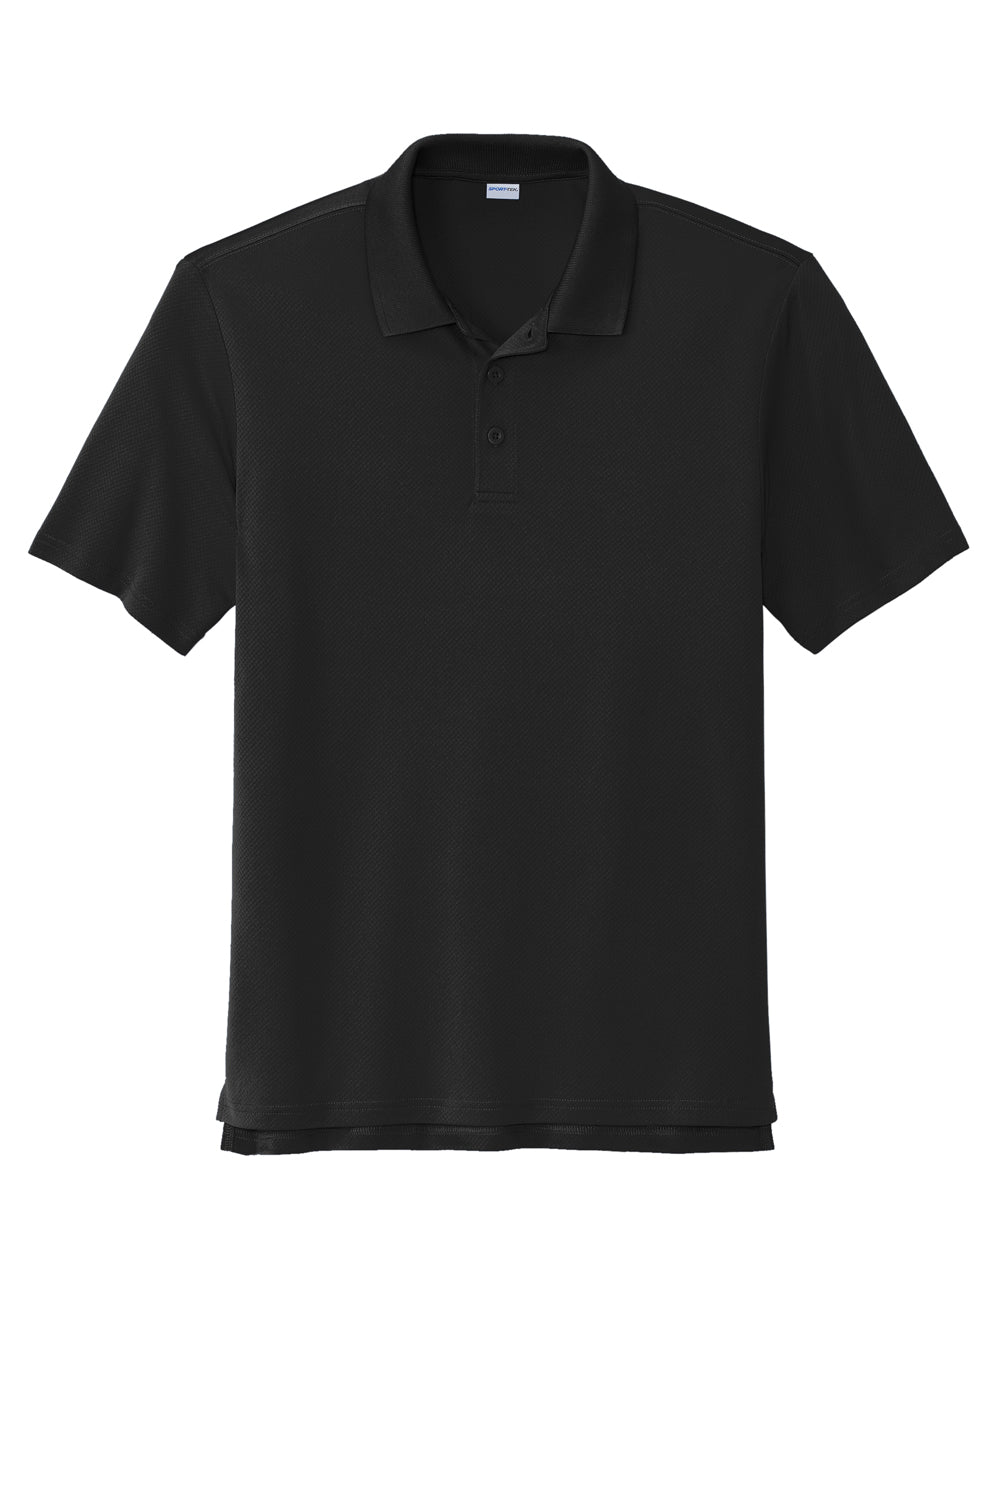 Sport-Tek Mens Sideline Short Sleeve Polo Shirt Black Flat Front